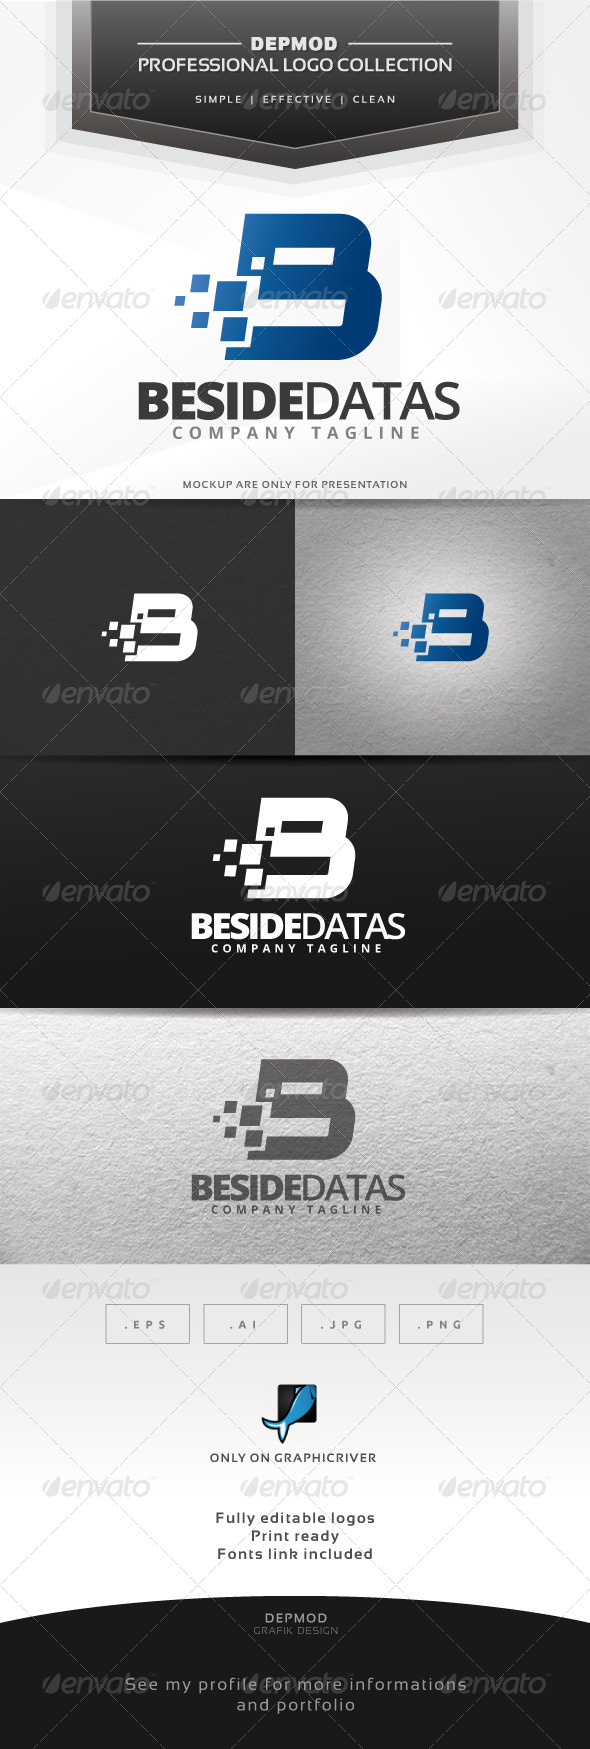 Beside Datas Logo